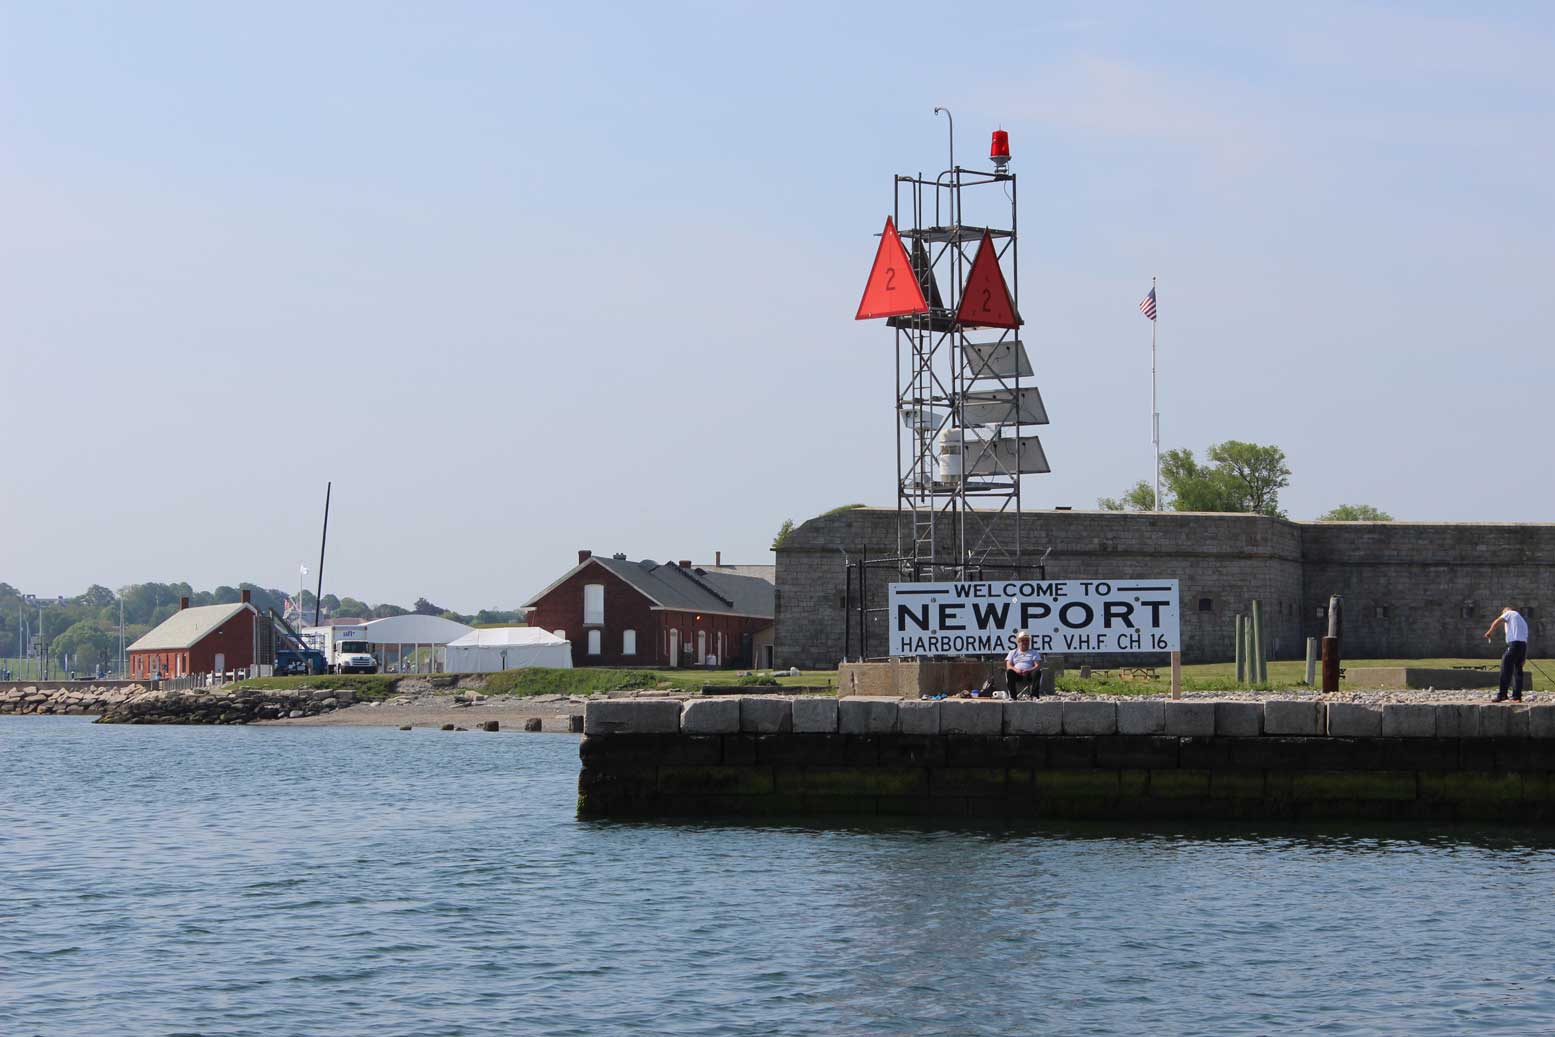 Sailing Hall of Fame Coming to Newport